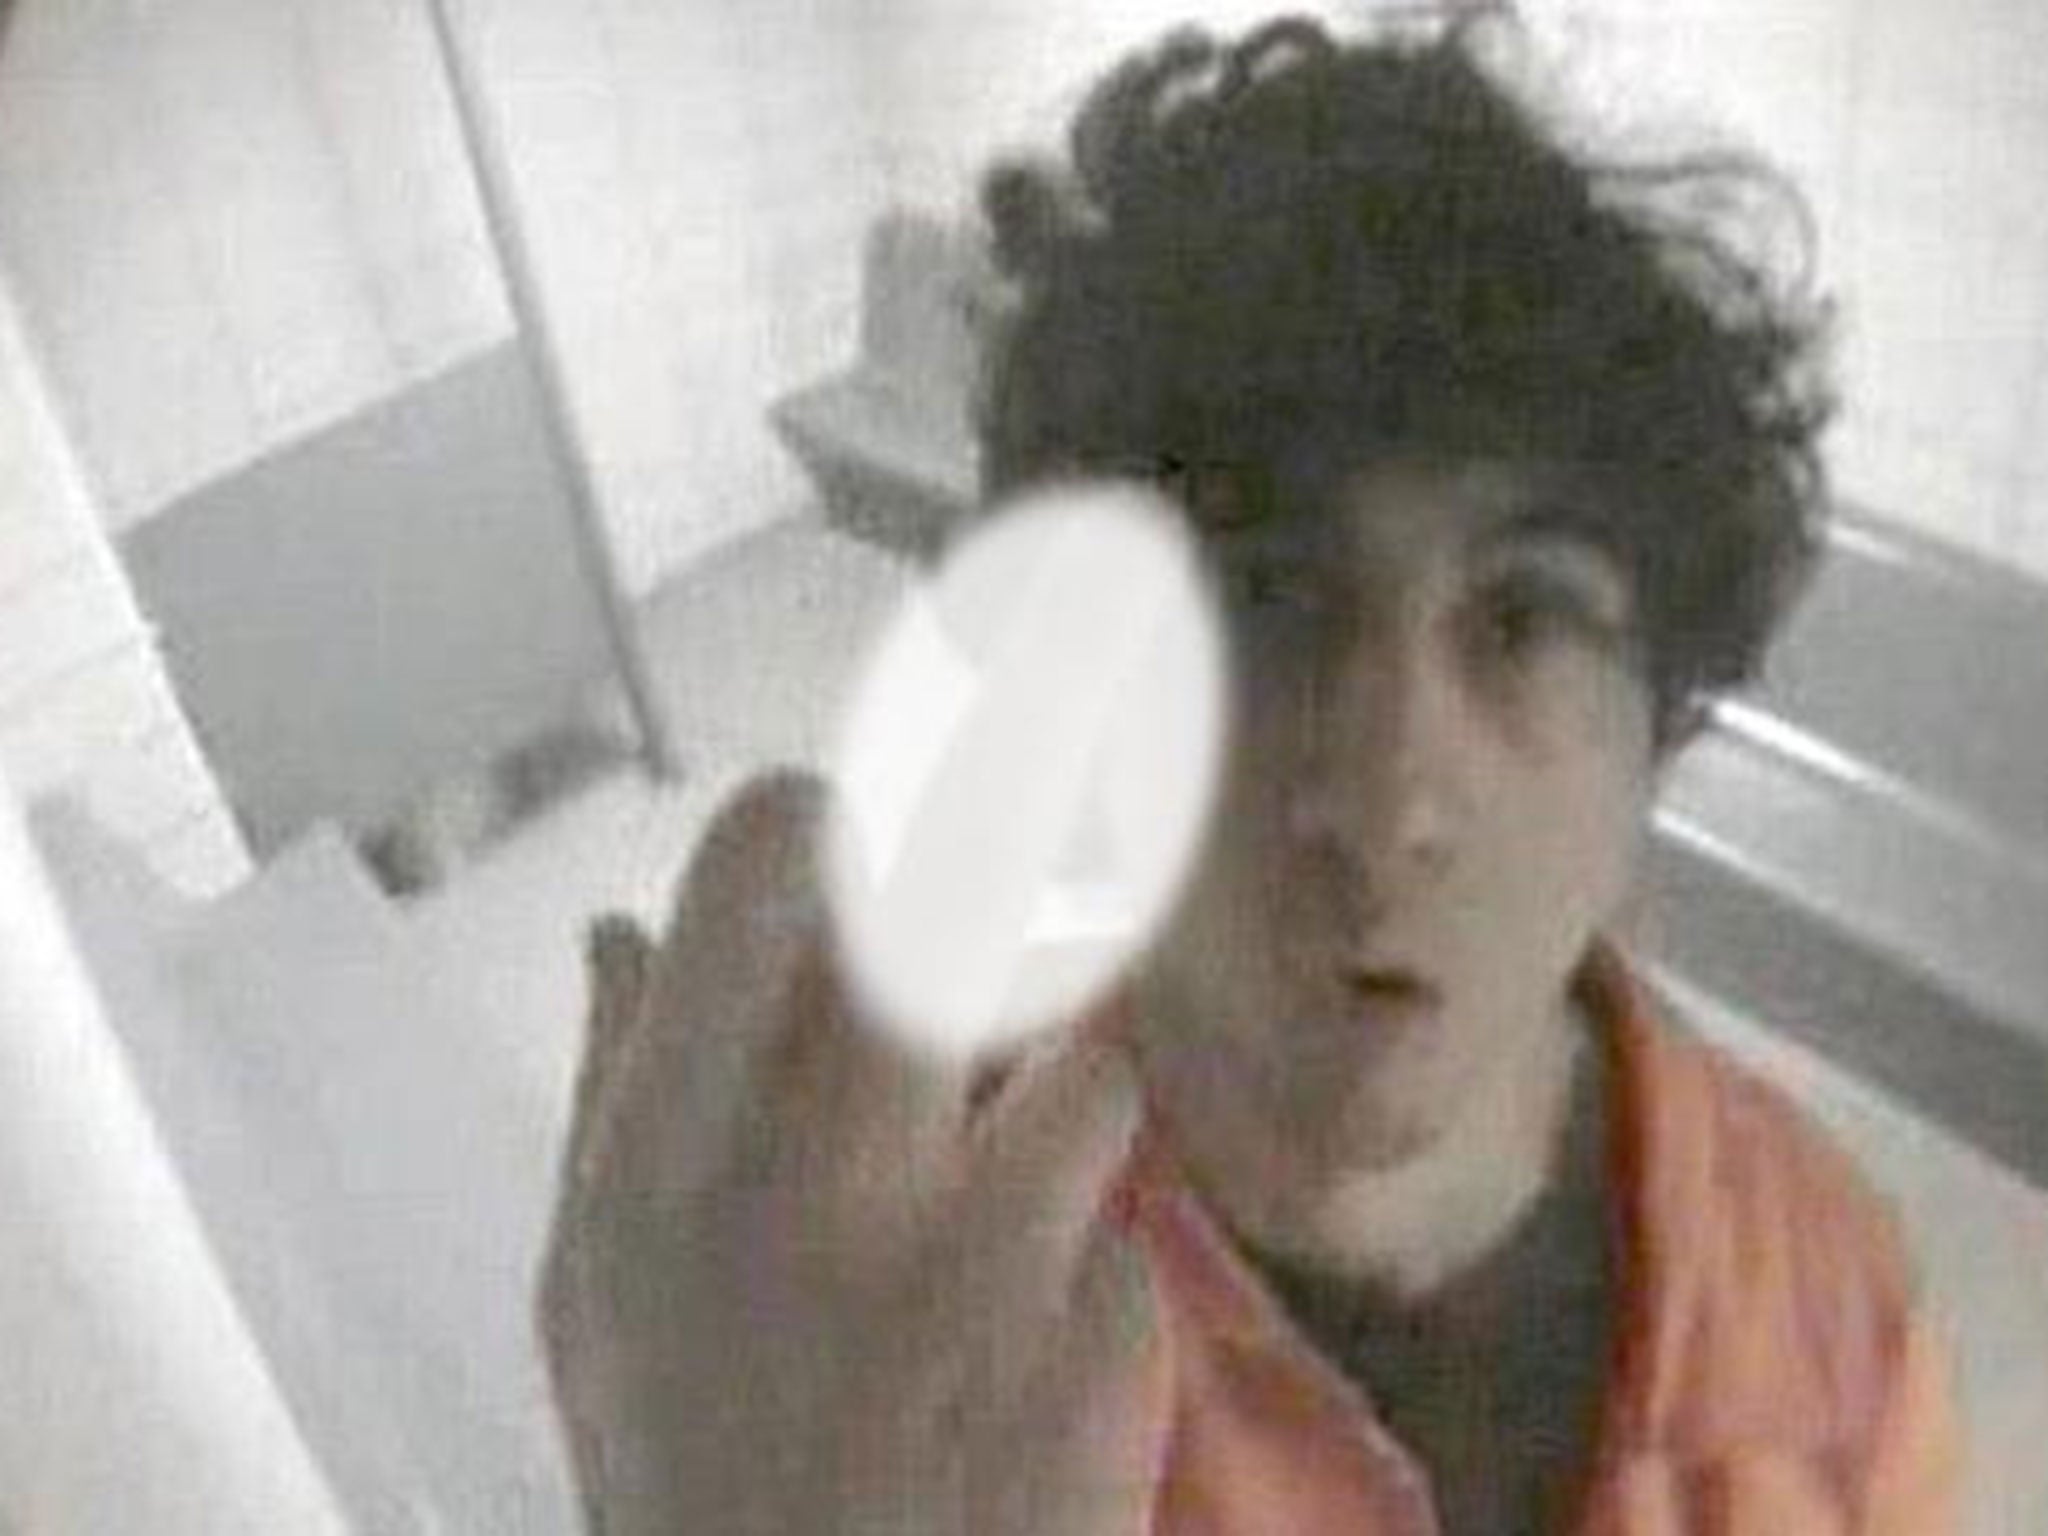 Tsarnaev swearing at the camera in 2013